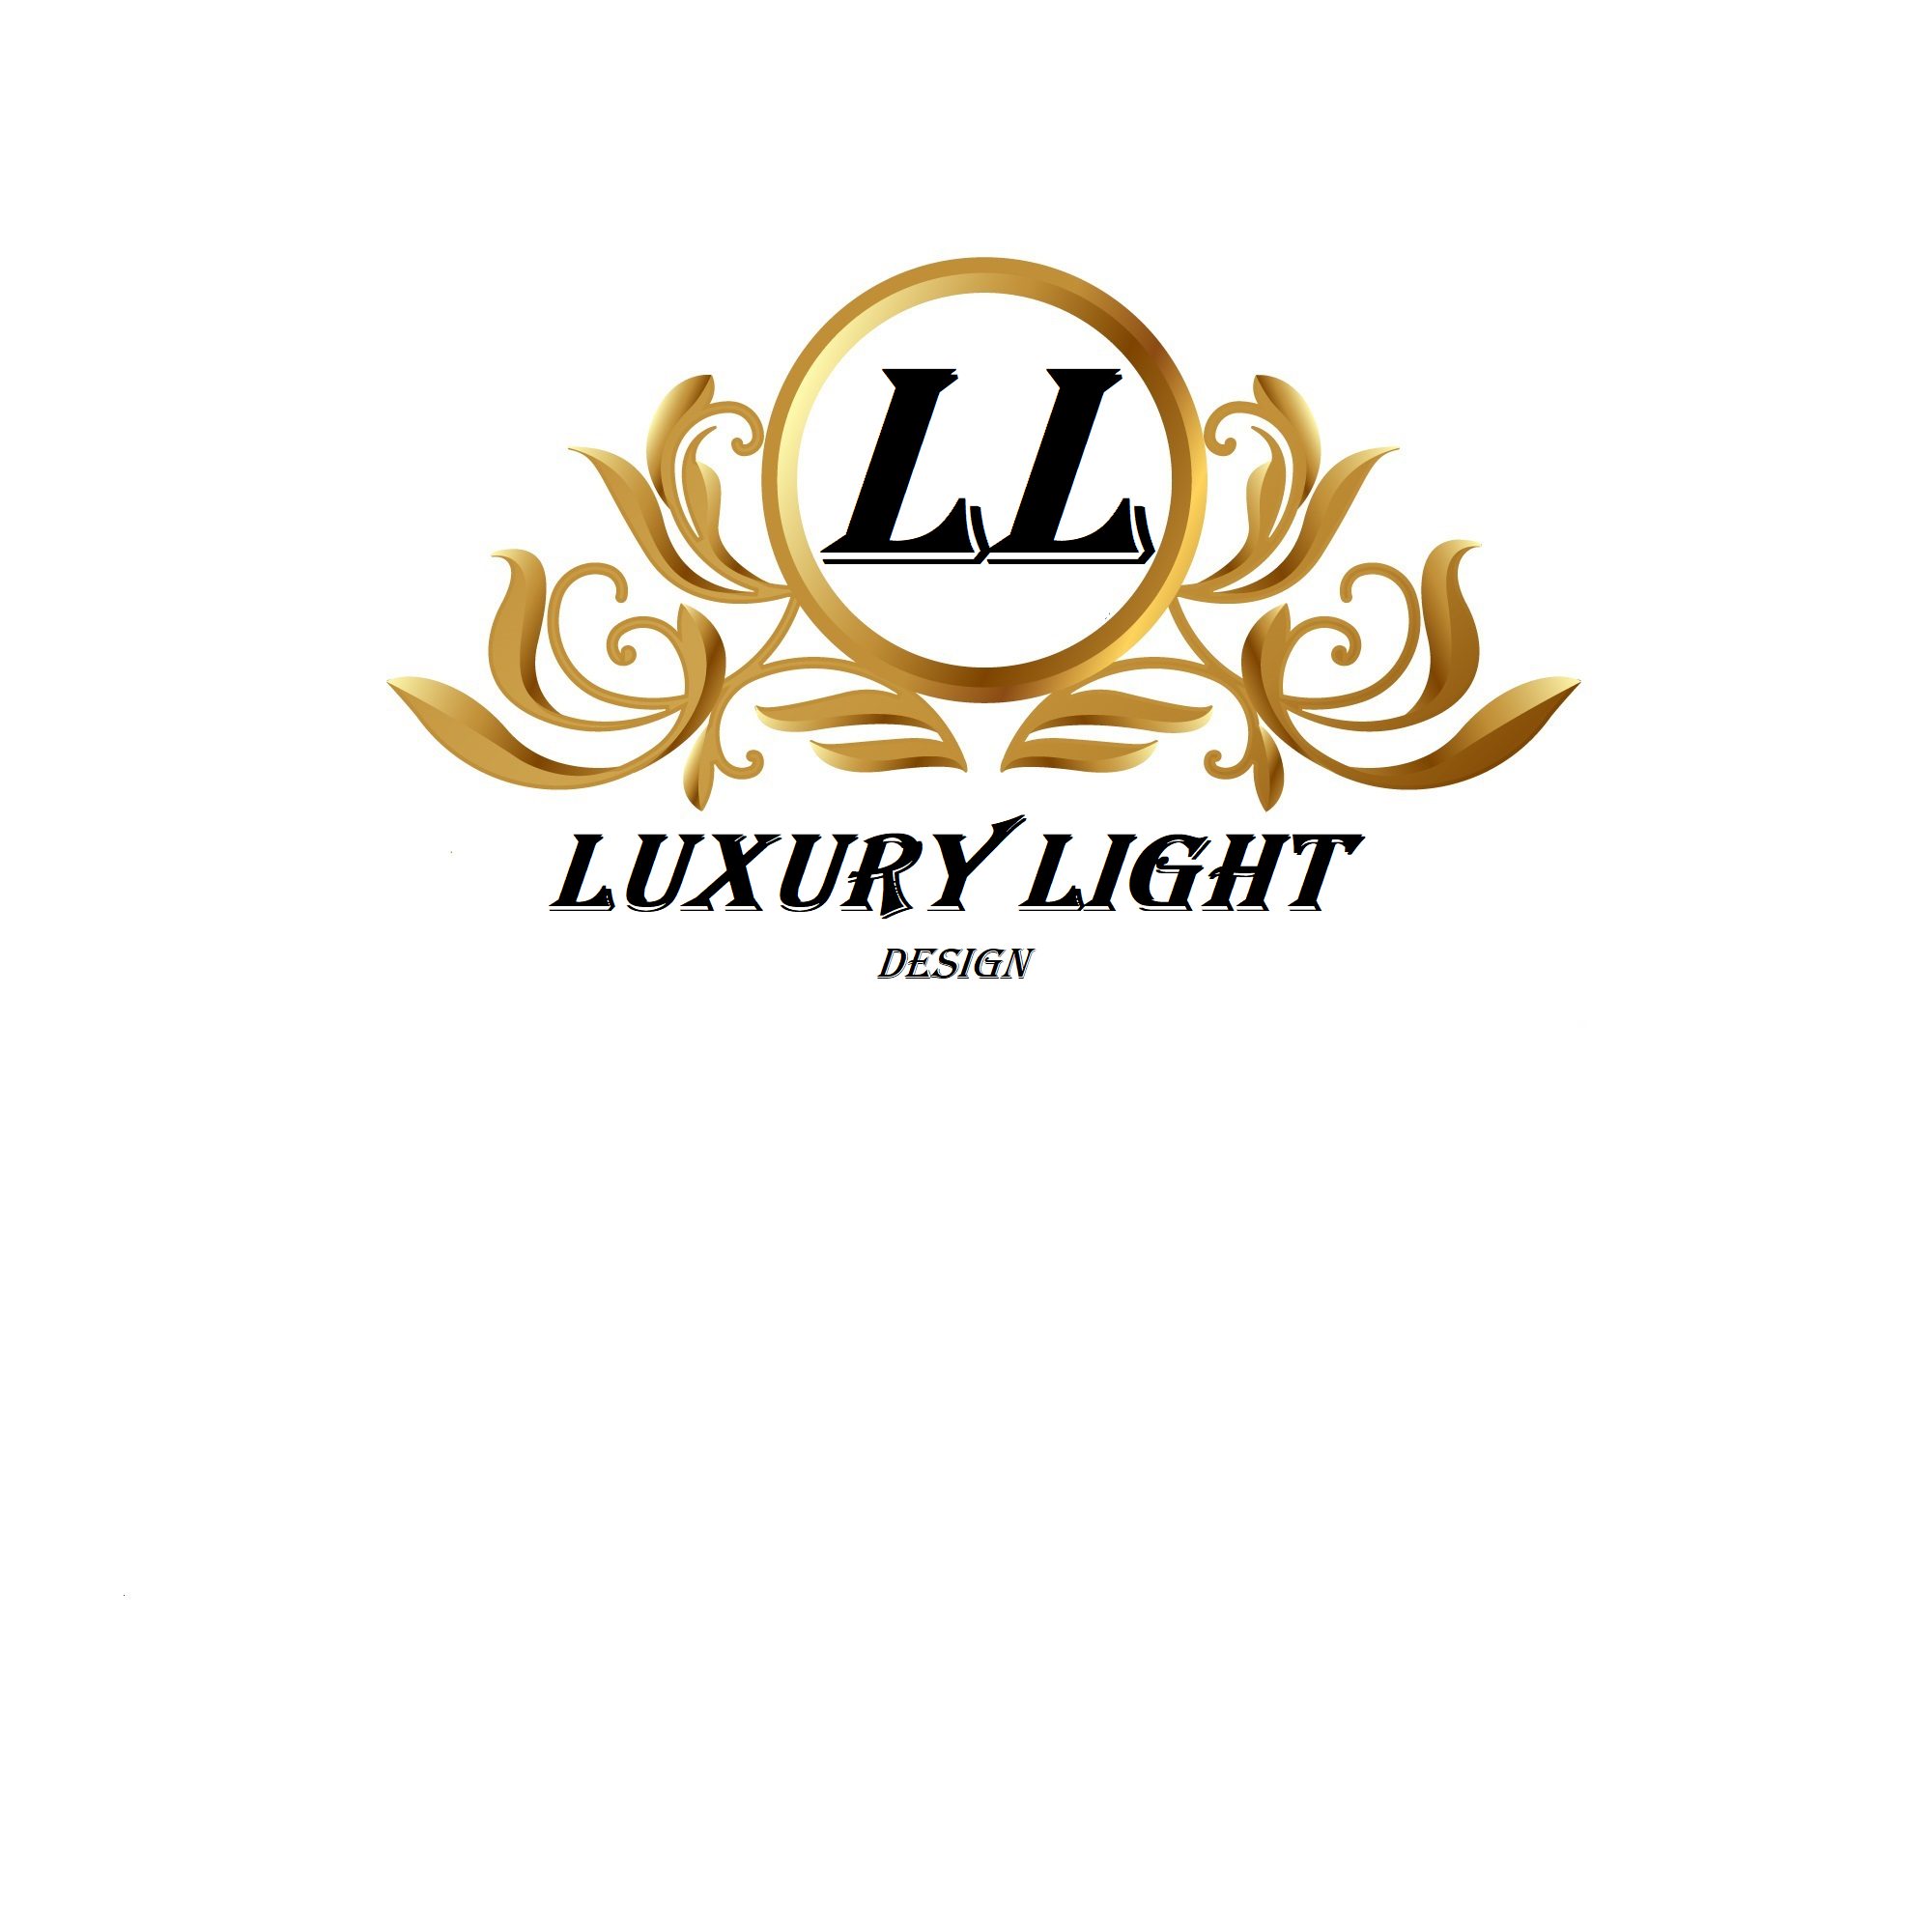 Ll Luxury light Design